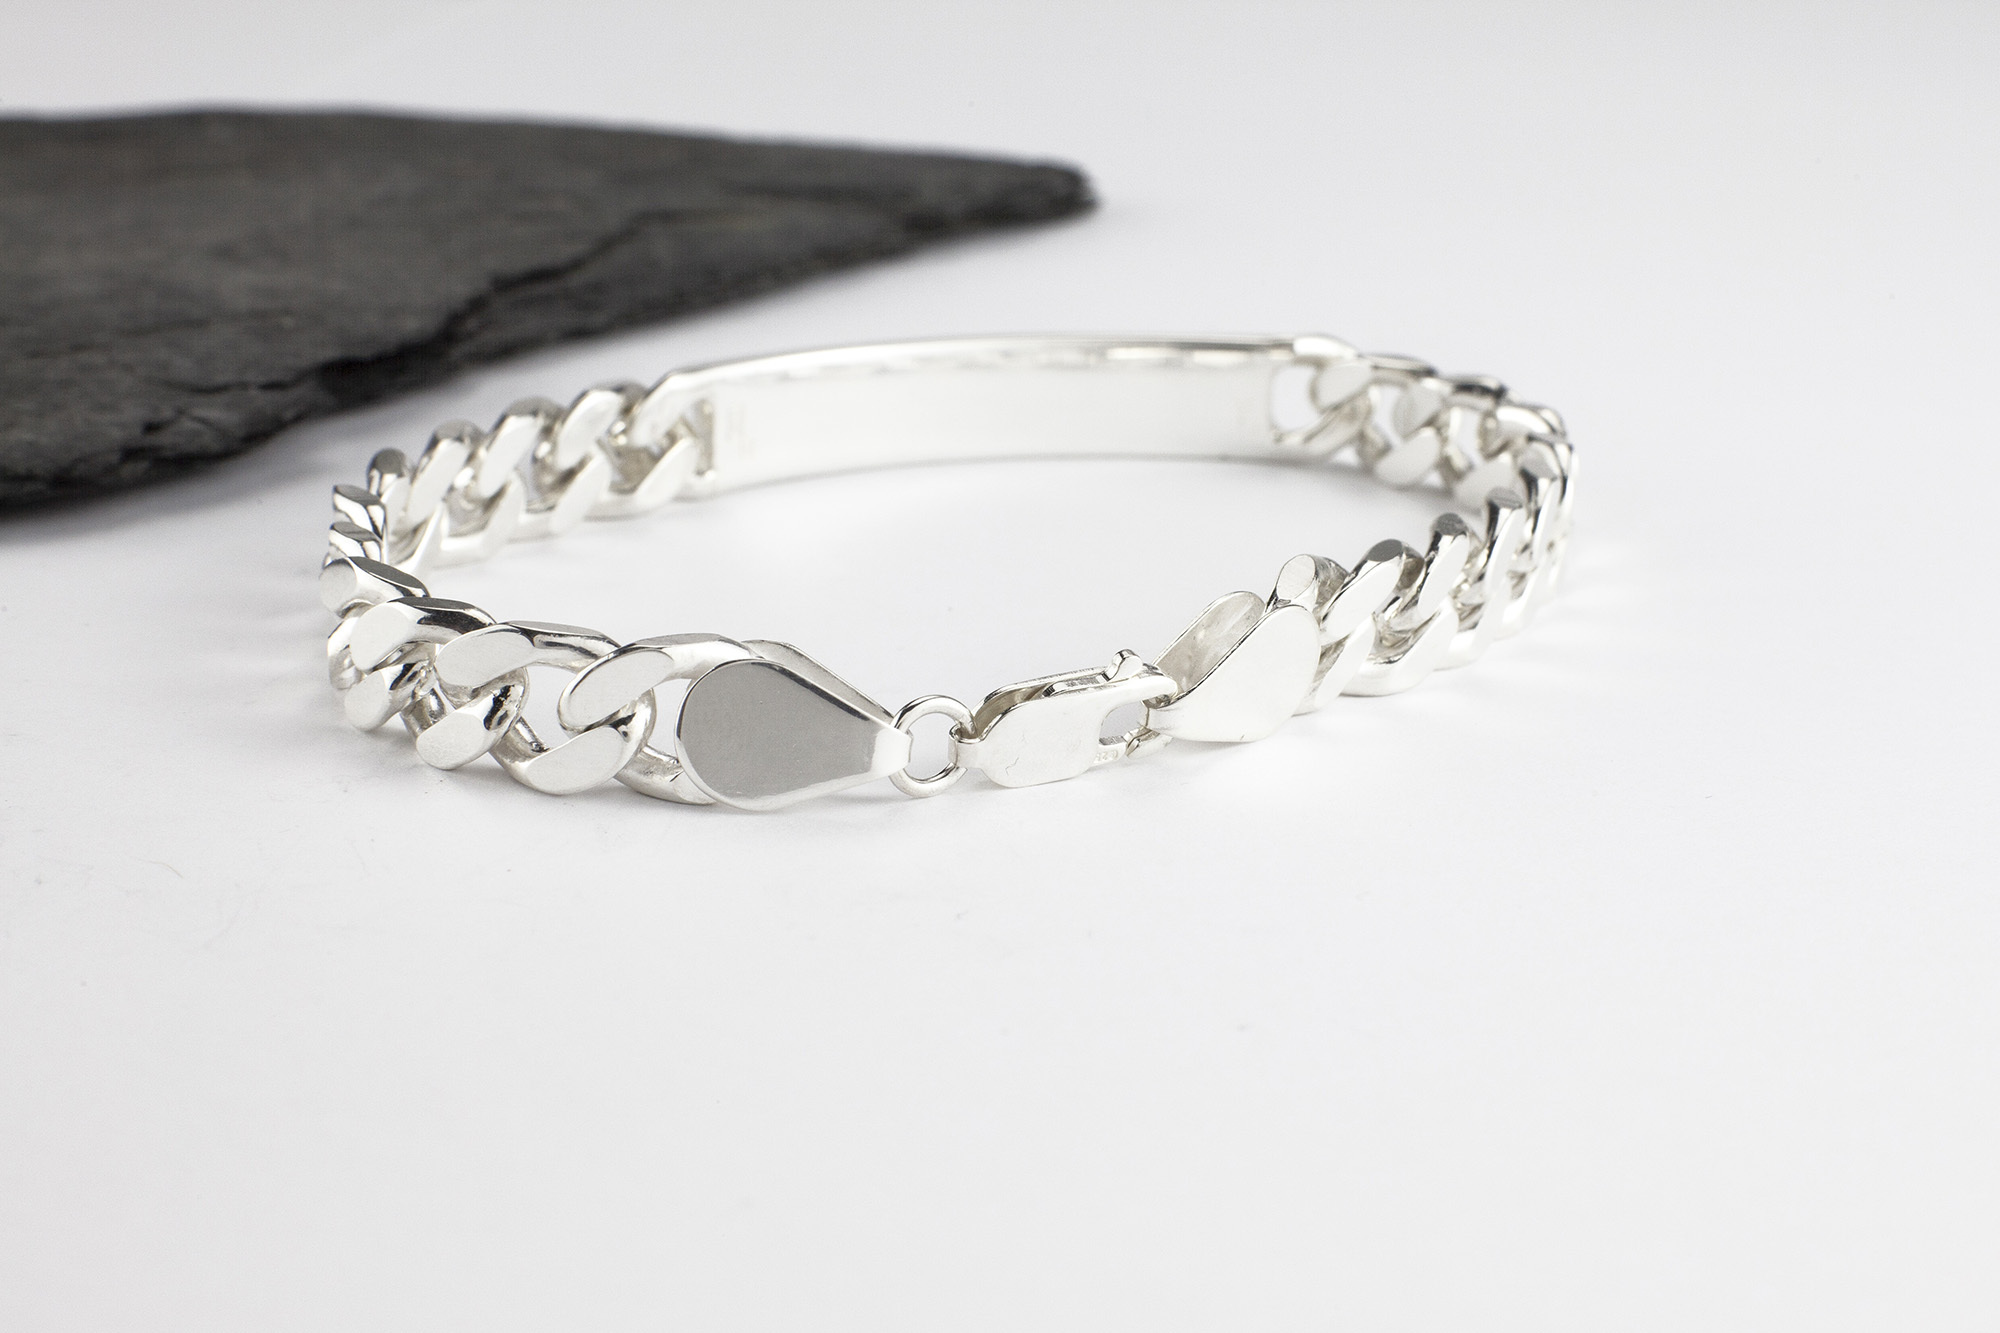 Gucci Interlocking bracelet in 925 sterling silver | GUCCI® US